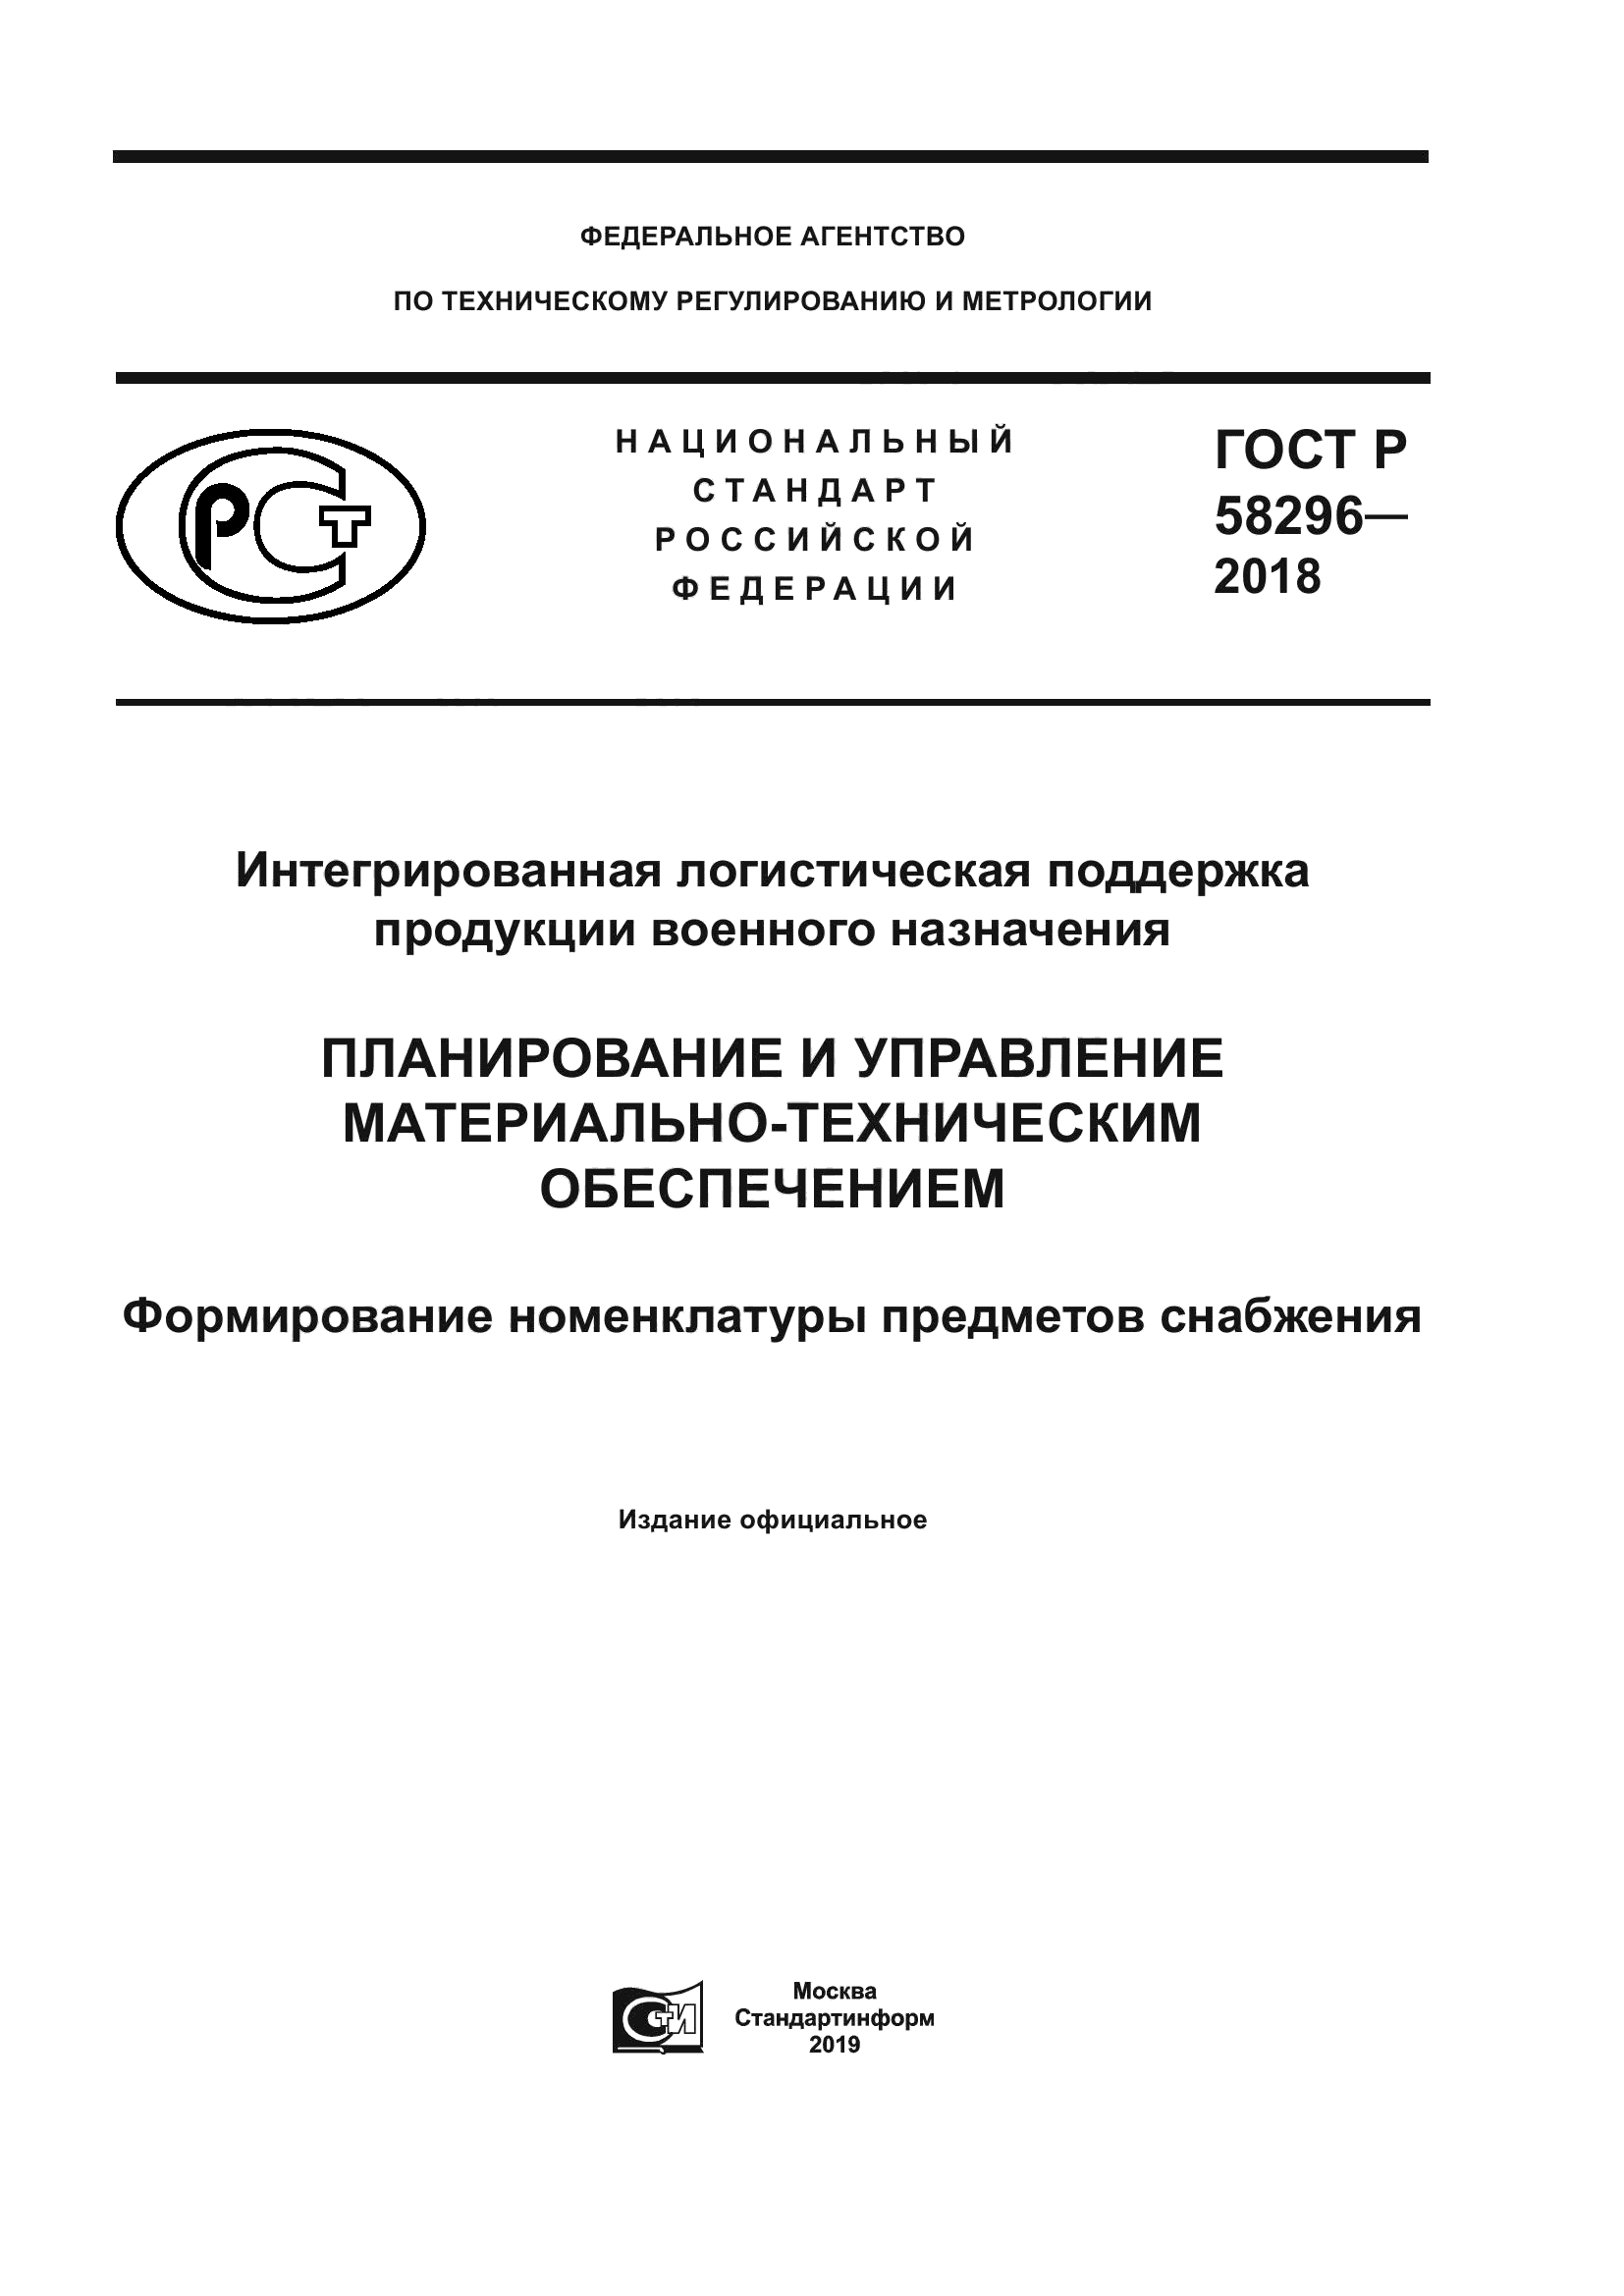 ГОСТ Р 58296-2018